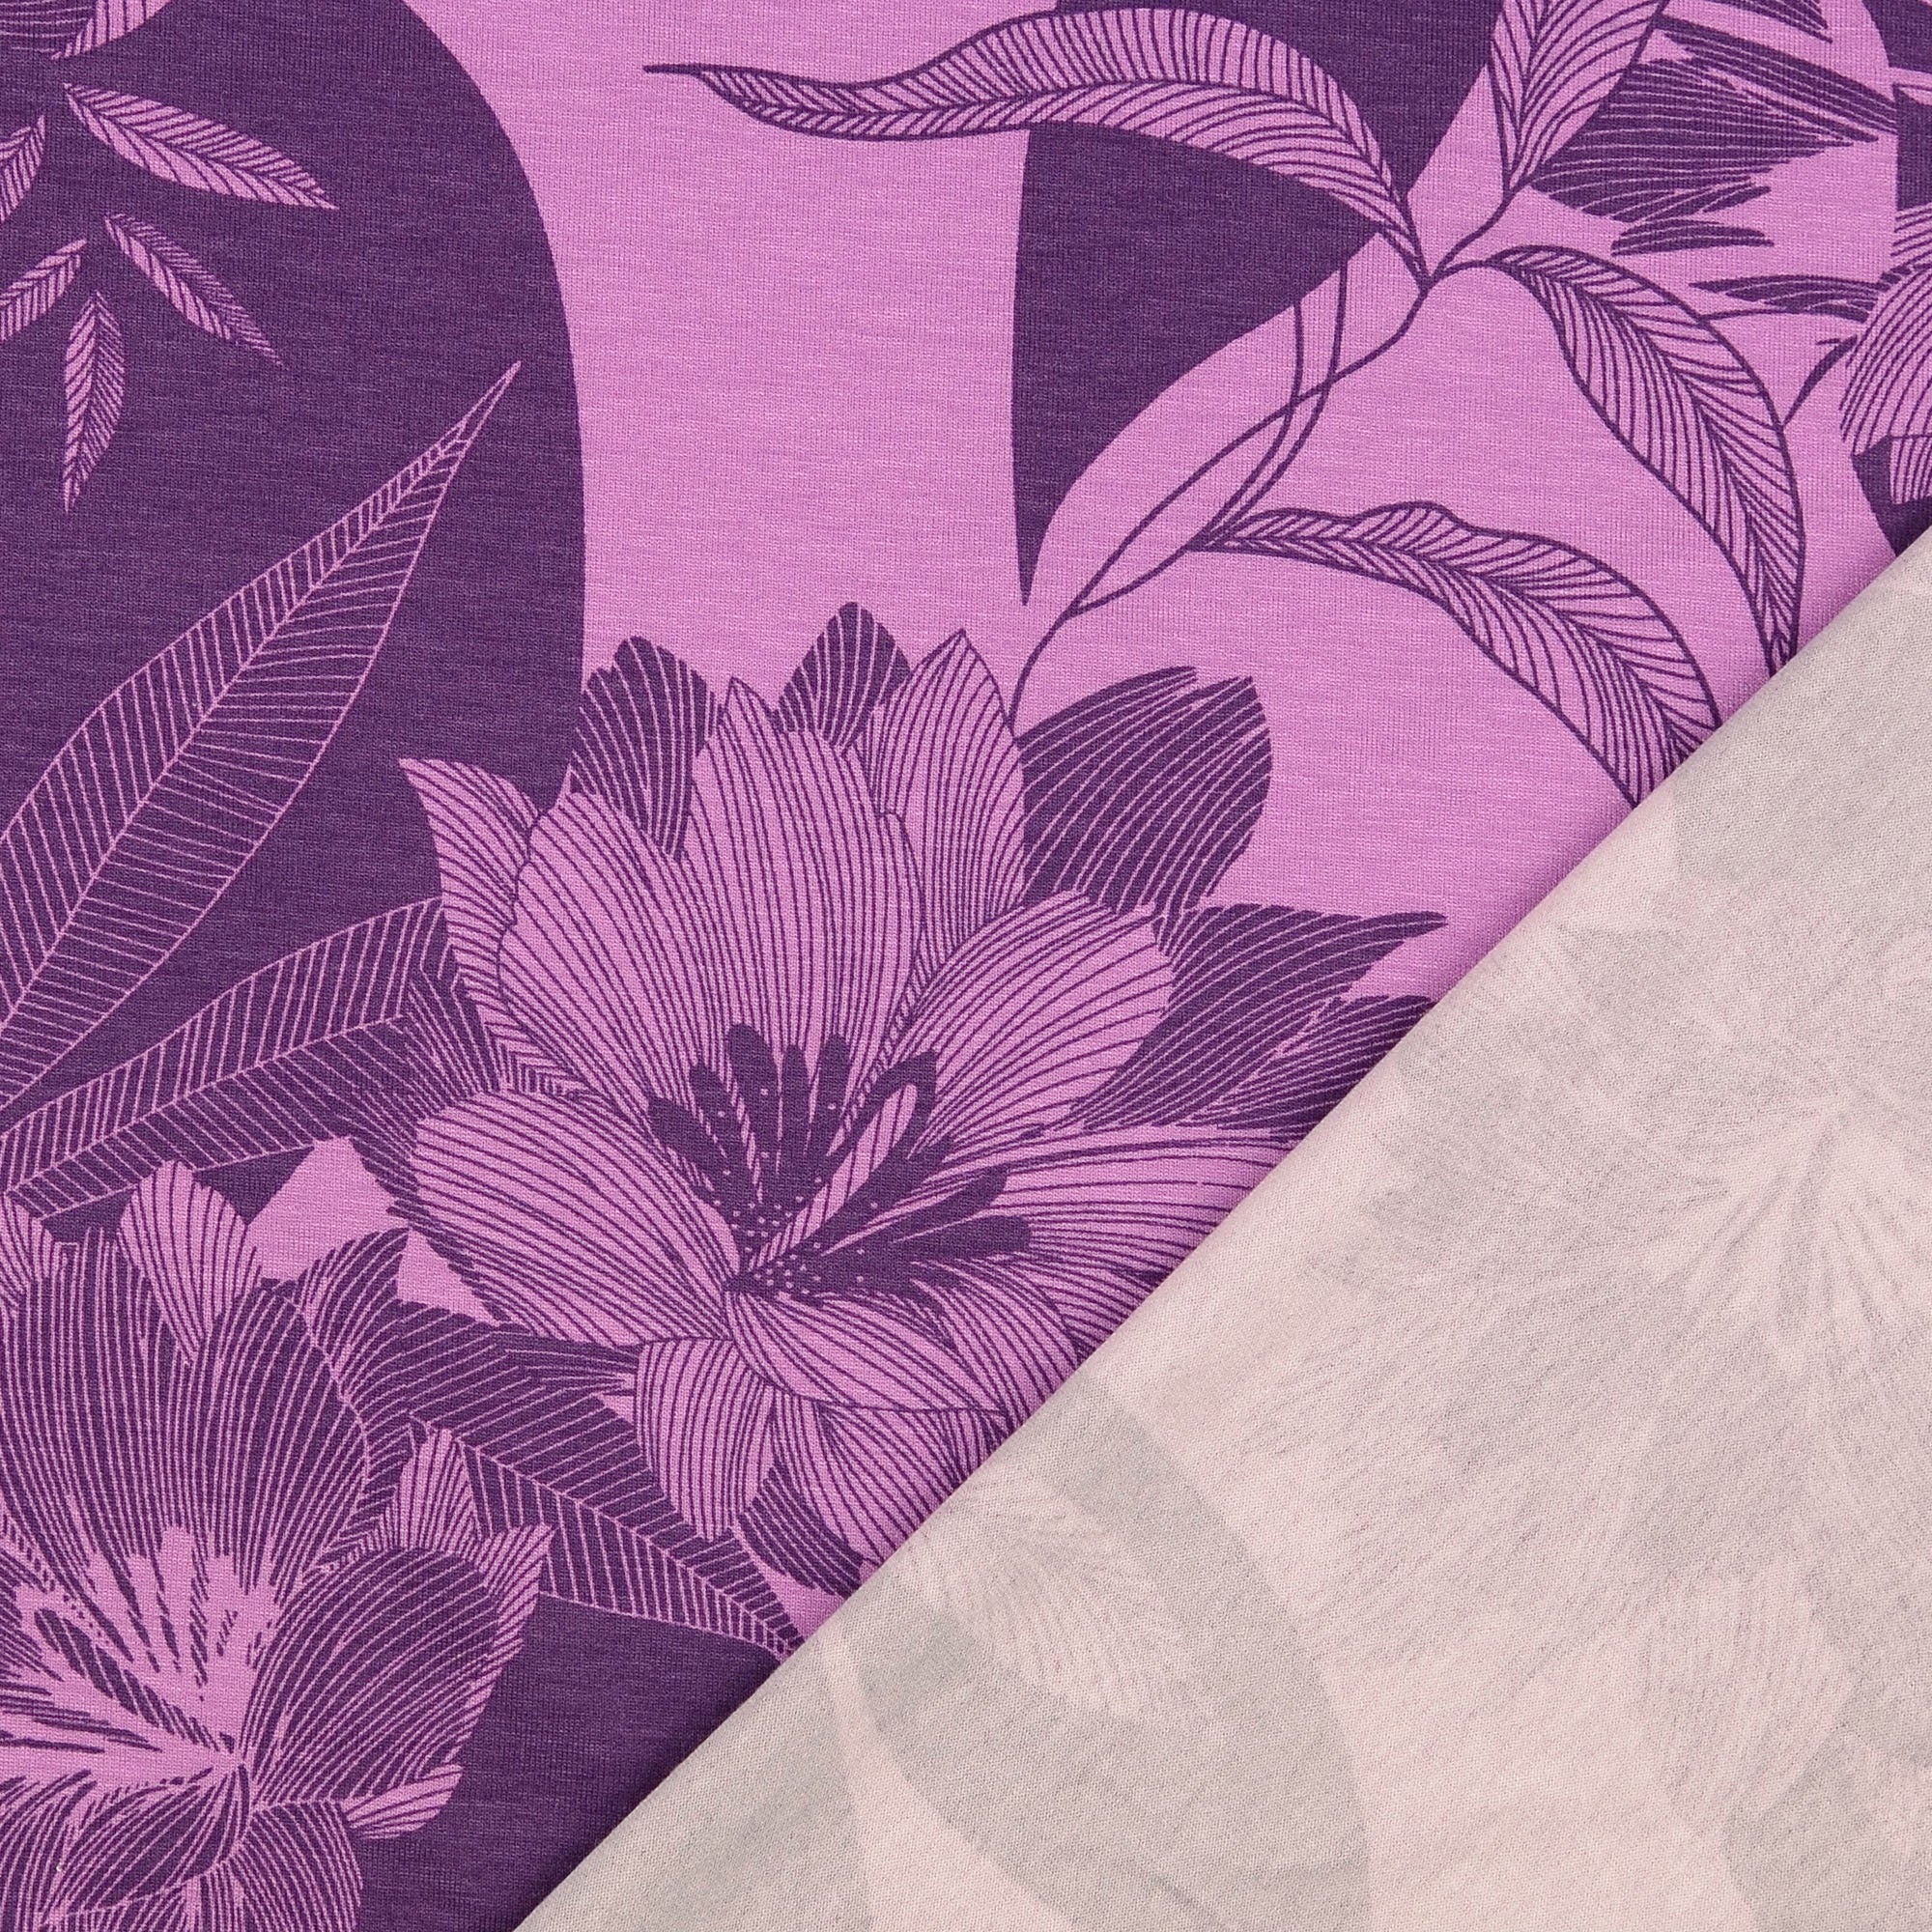 REMNANT 1.04 Metres - Monochrome Bouquet Lavender Herb Viscose Jersey Fabric